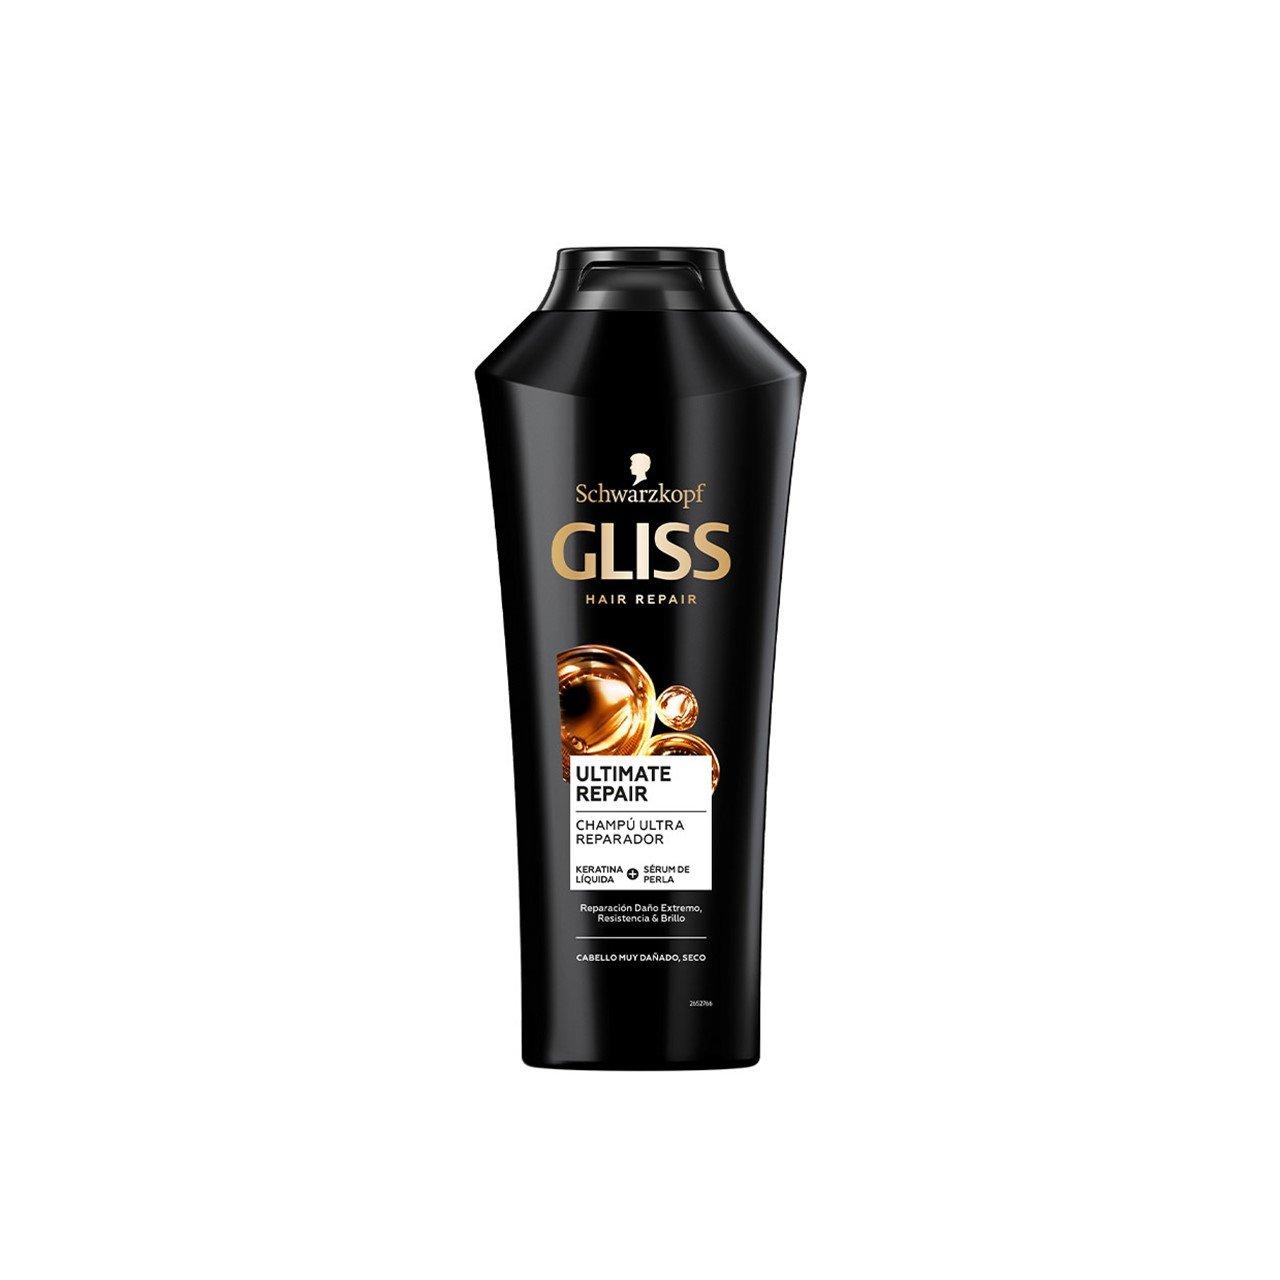 Gliss Ultimate Repair Strength Shampoo